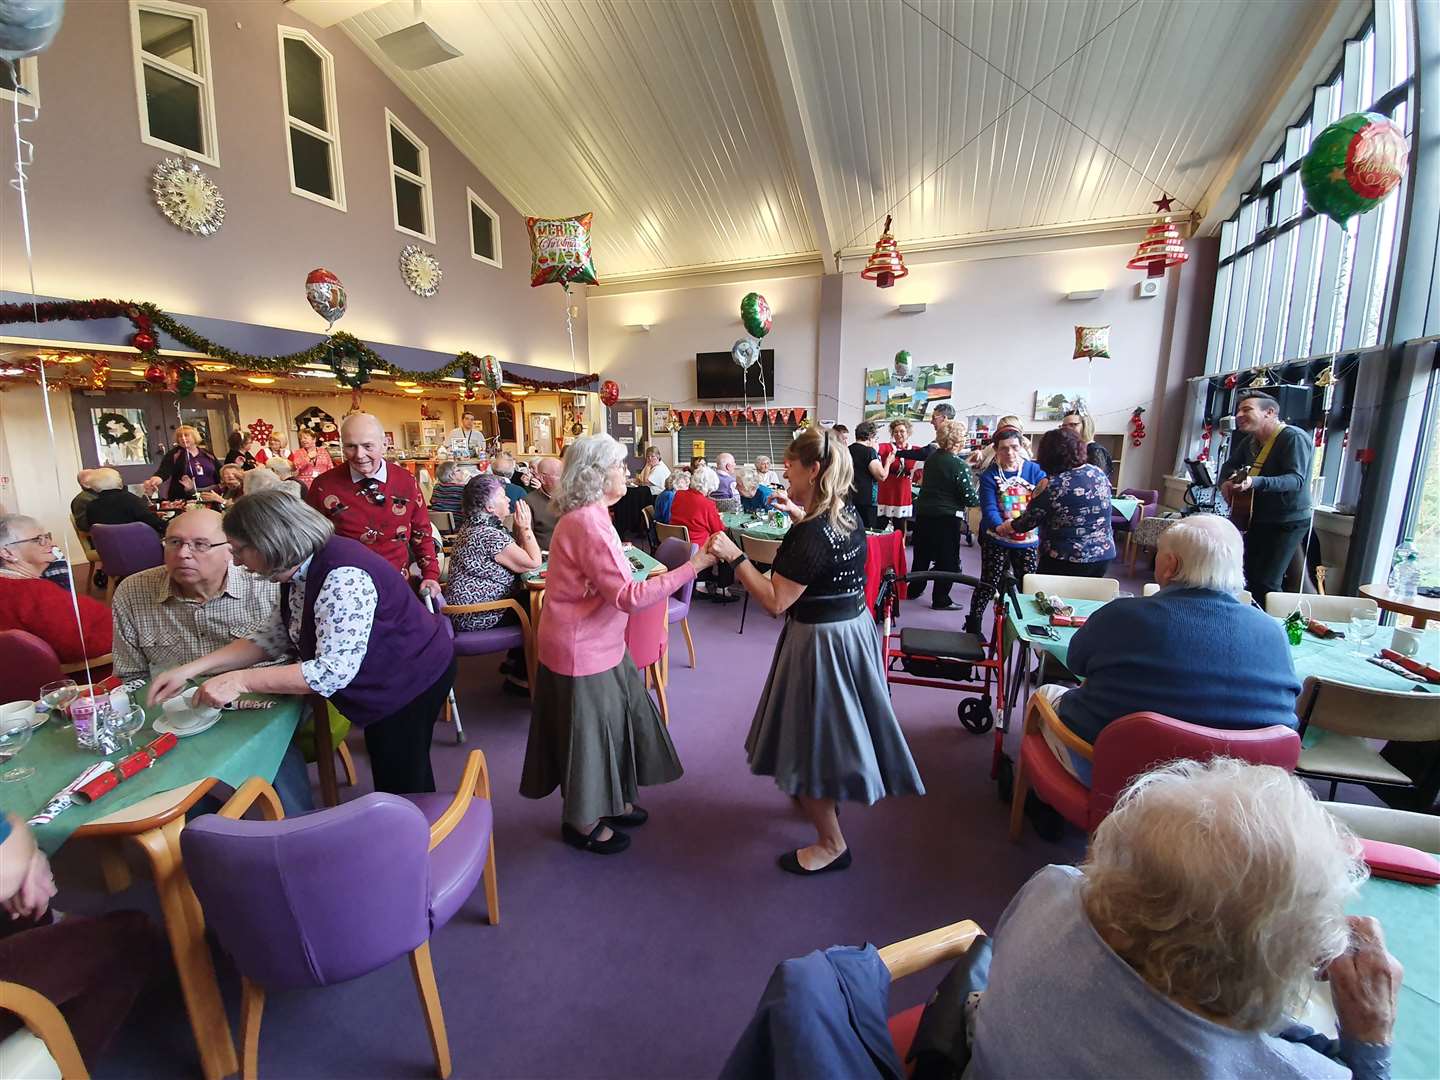 The centre provides a community spot for over 50's. Photo: Jon Wilson